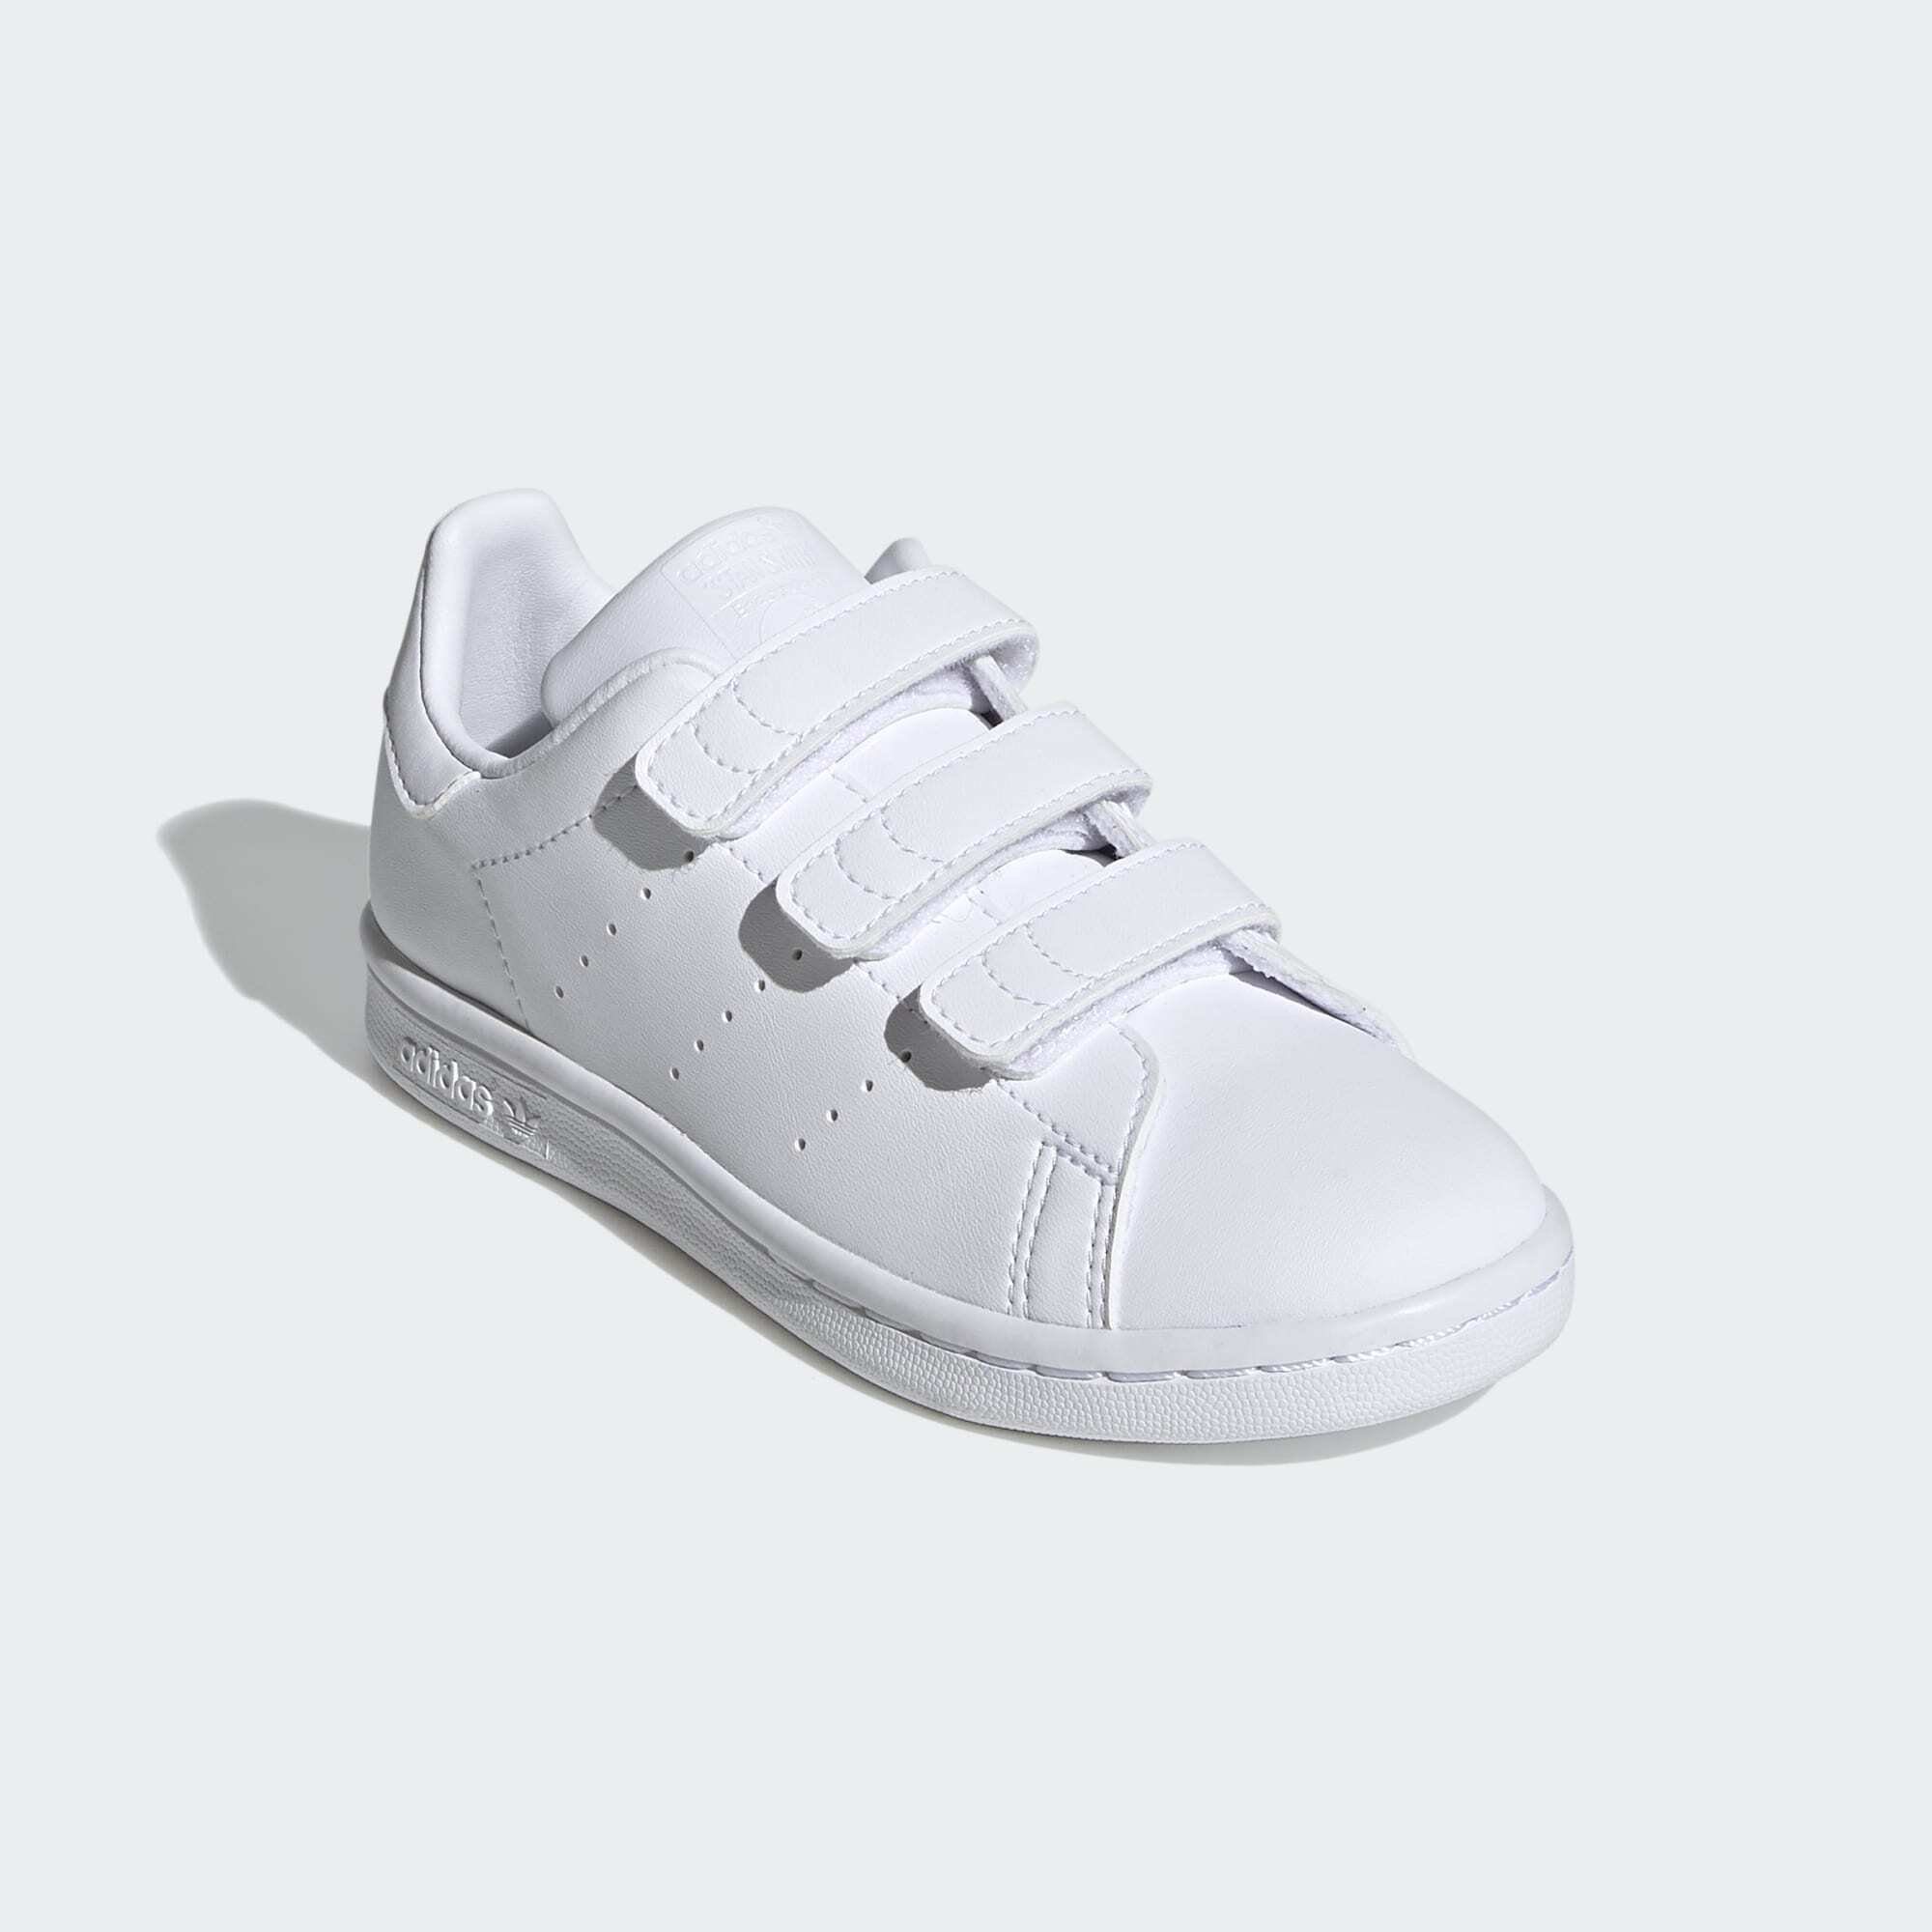 White Cloud White SCHUH / Originals White / adidas STAN Cloud Sneaker Cloud SMITH